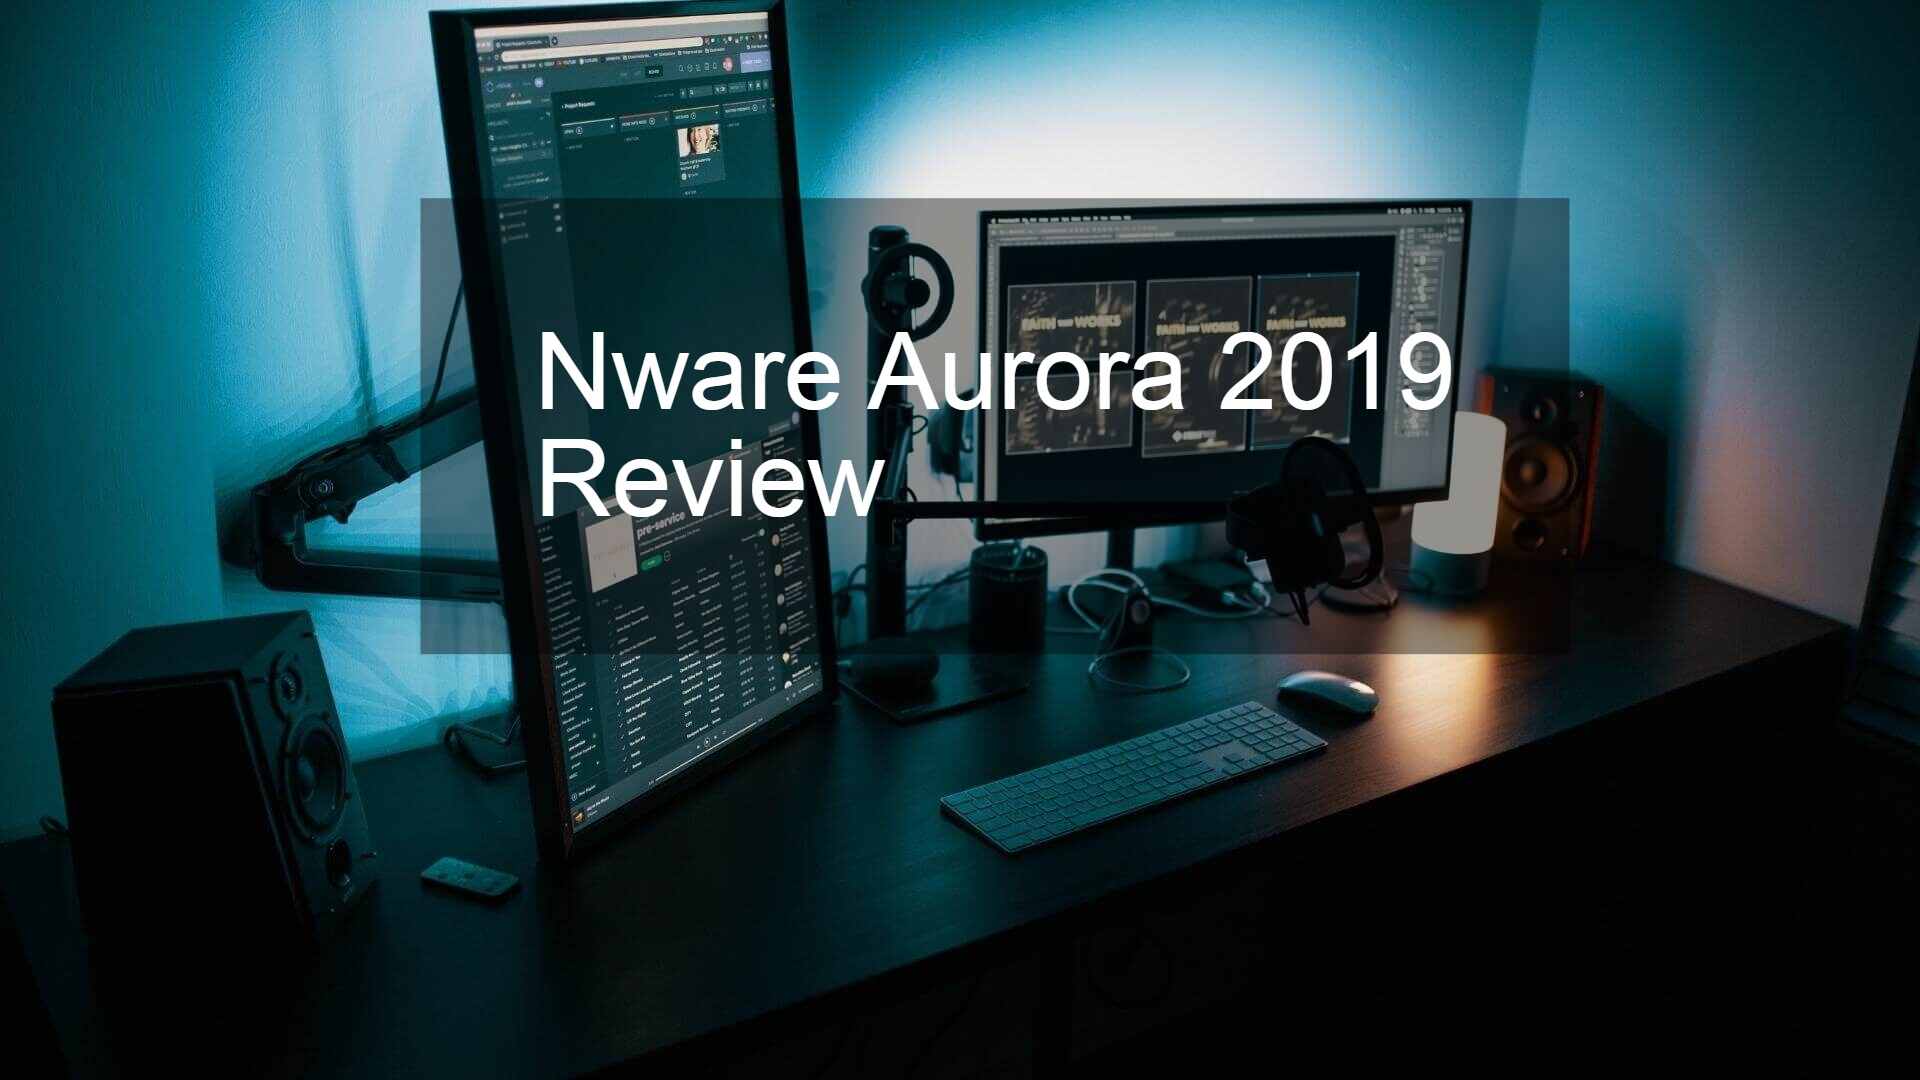 Enware Aurora 2019